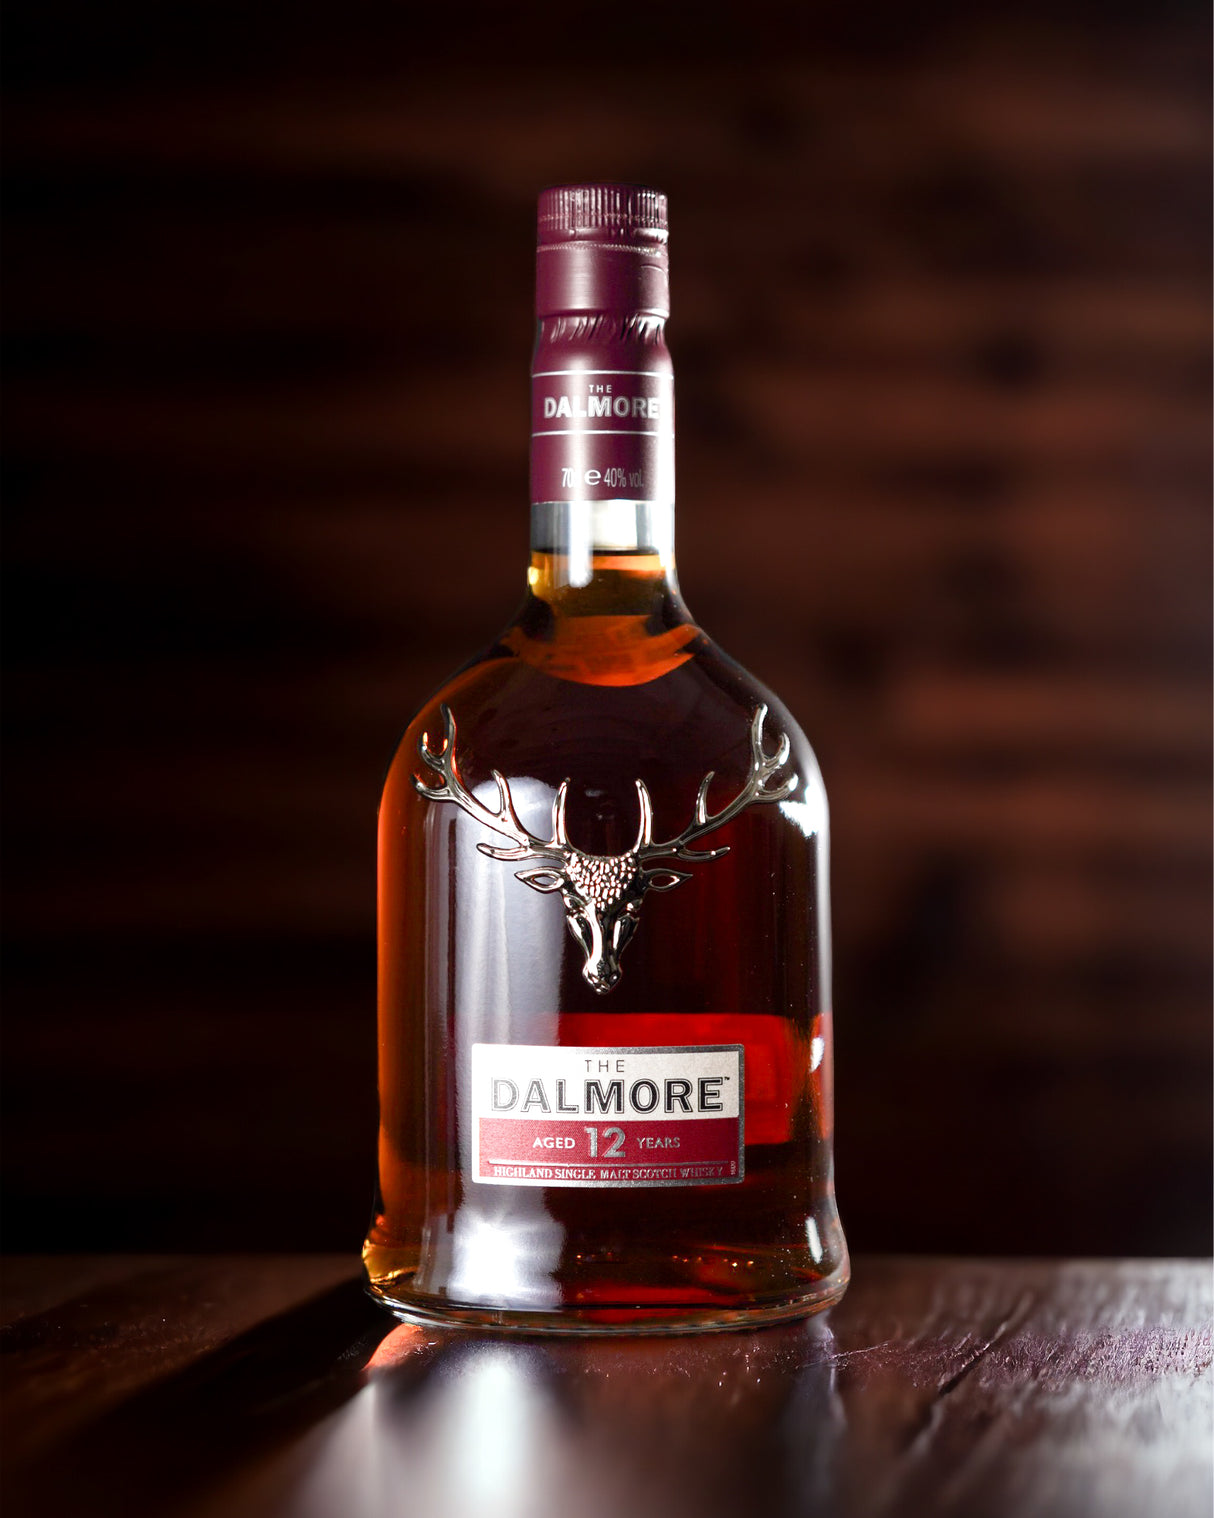 The Dalmore 12 Years Old Highland Single Malt Scotch Whisky